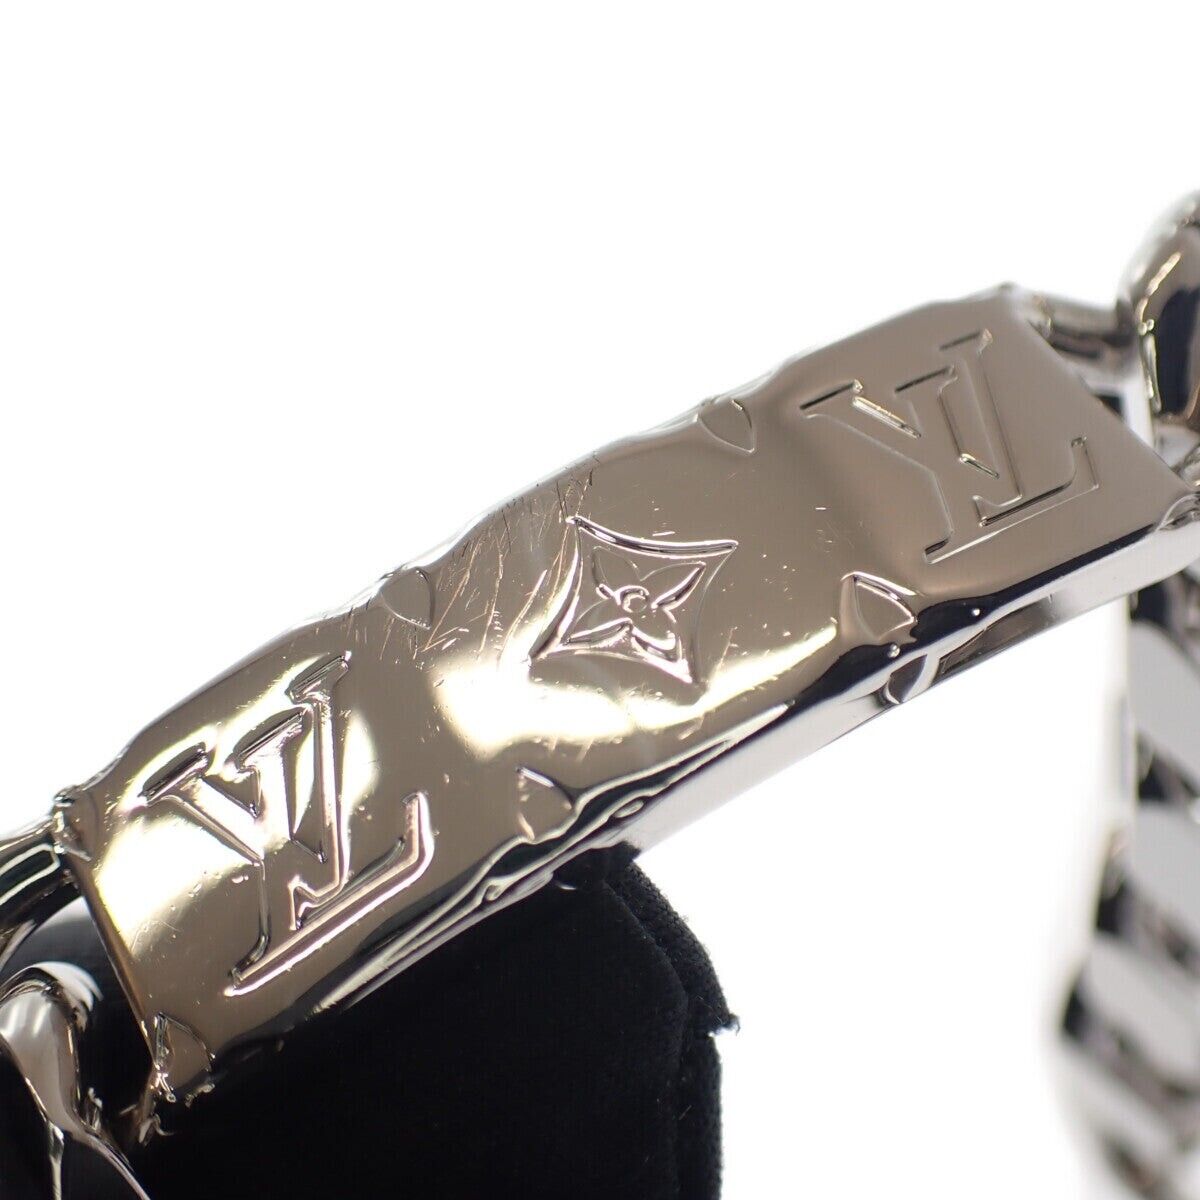 Louis Vuitton Monogram Jonc Cuff Bracelet